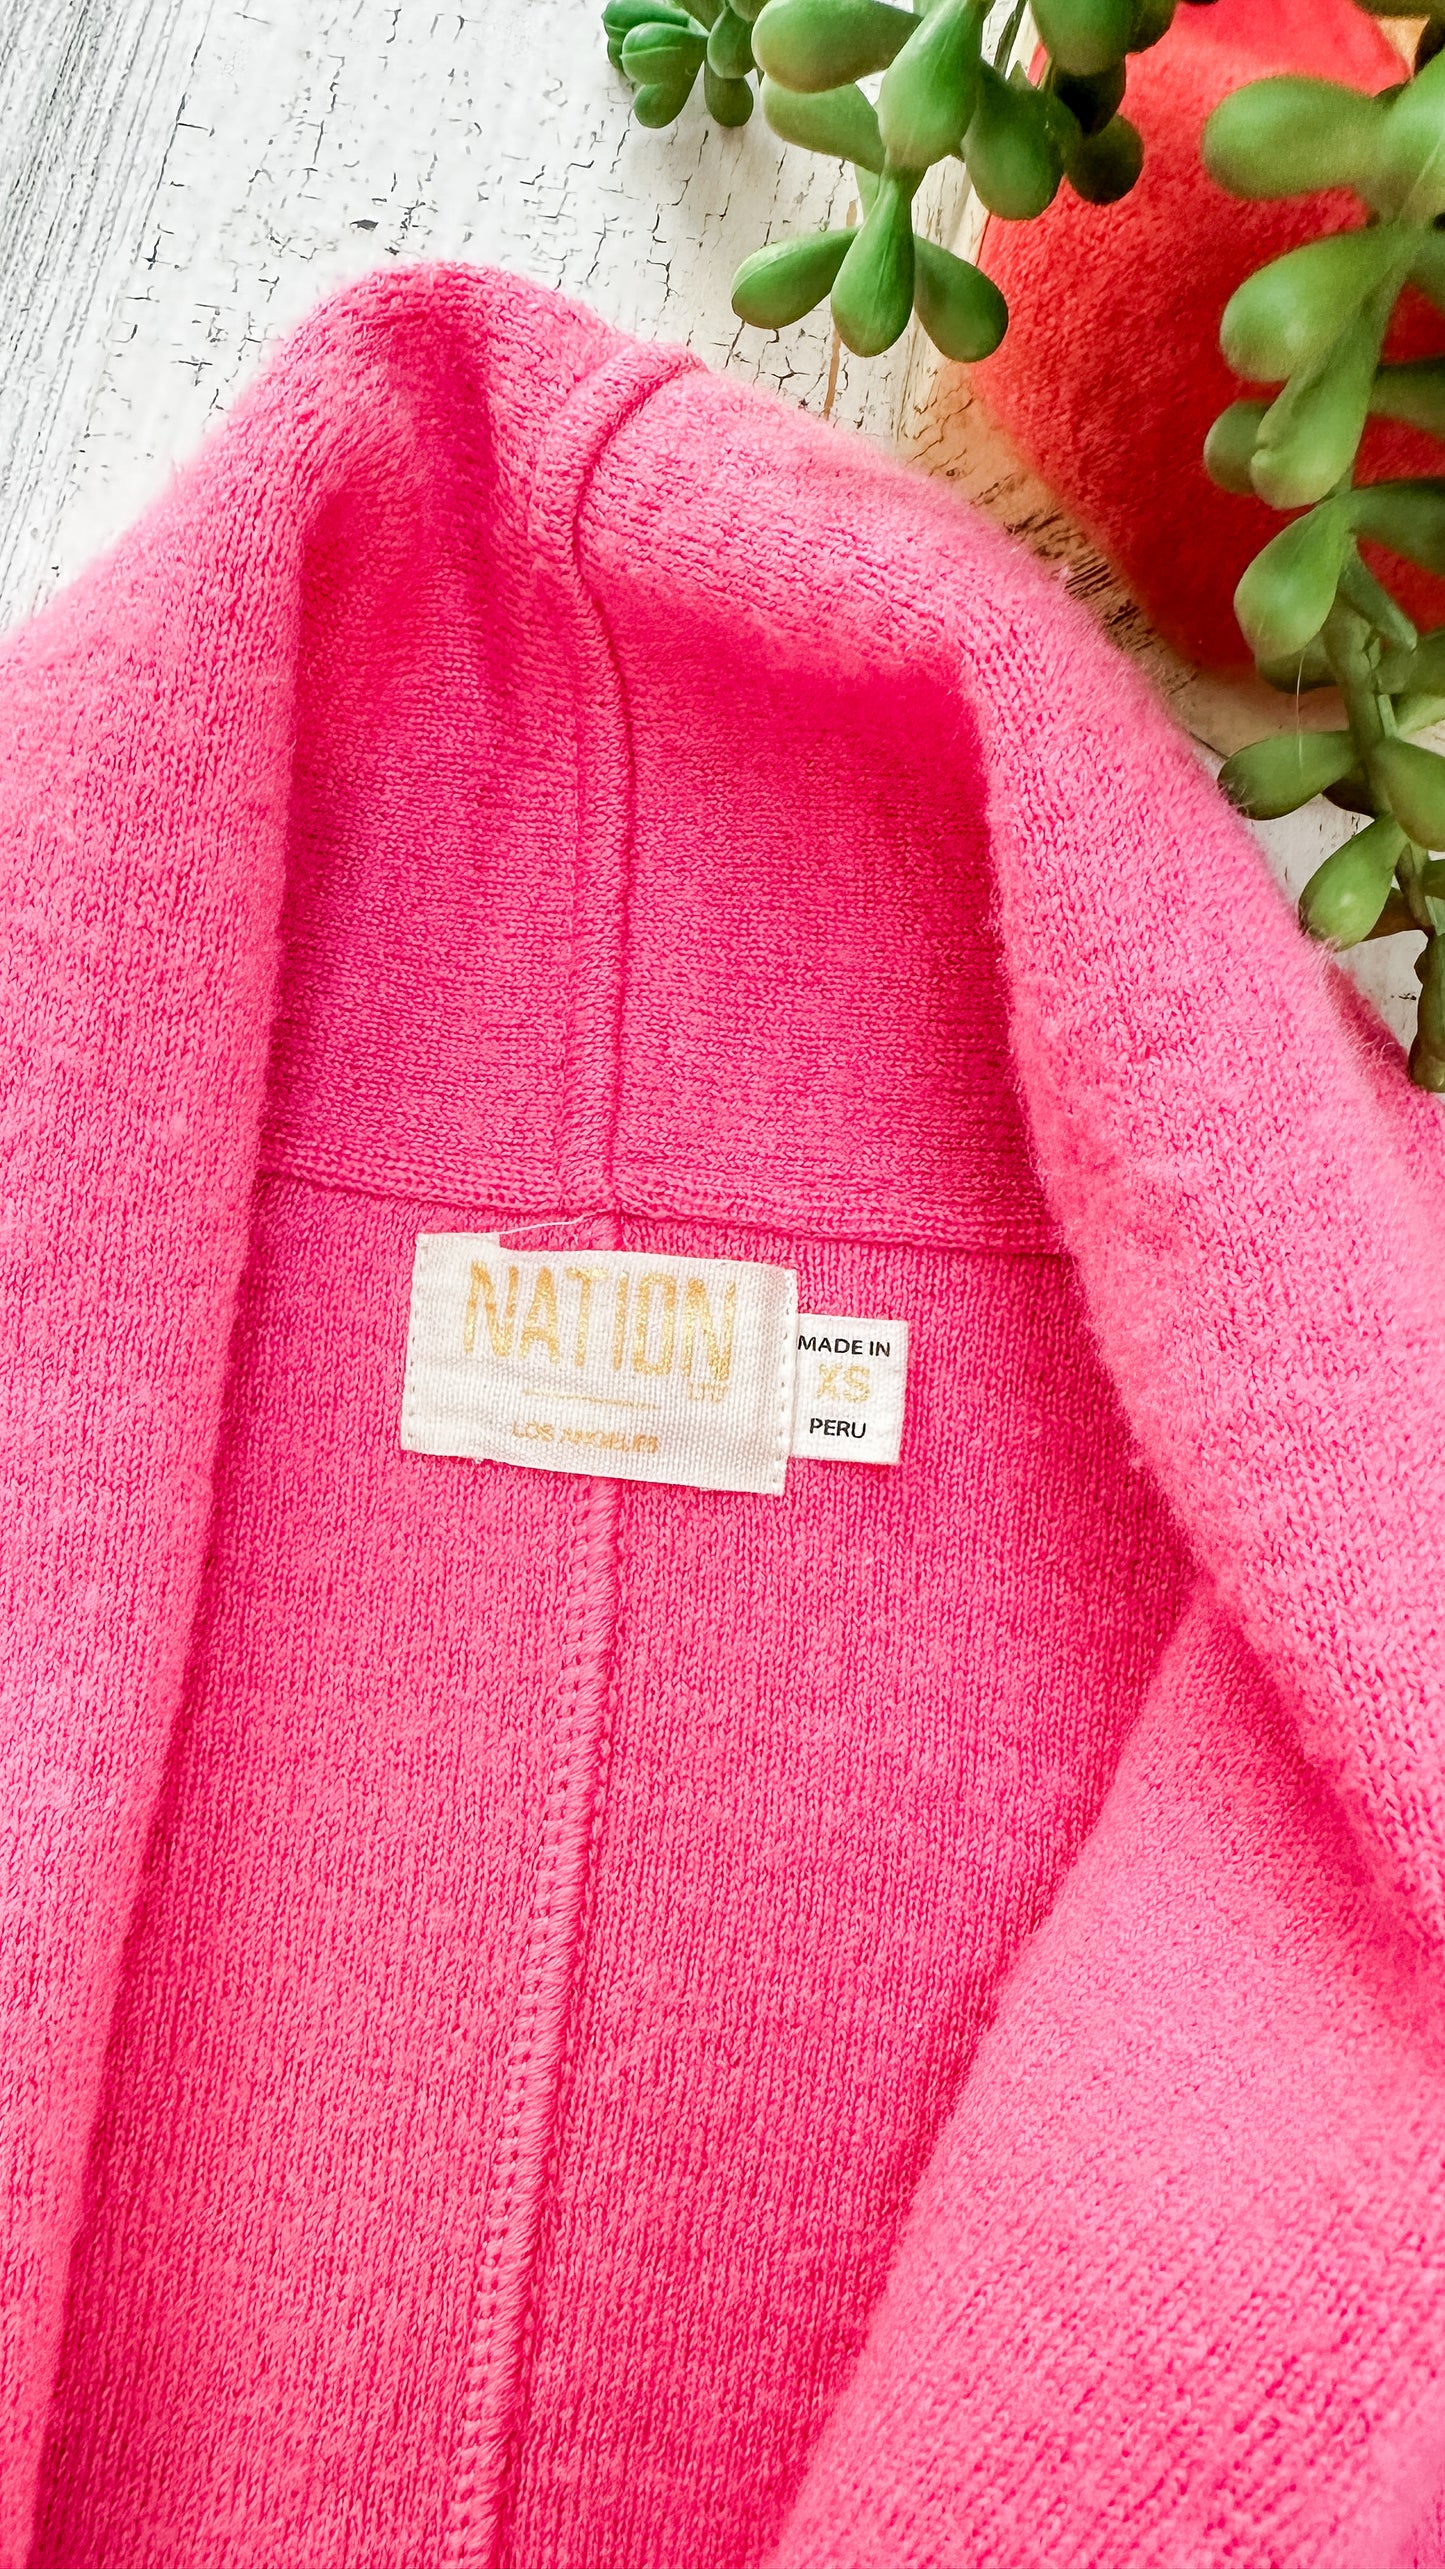 Nation LTD ‘Kelly’ Bubblegum Pink Wool Blazer Jacket